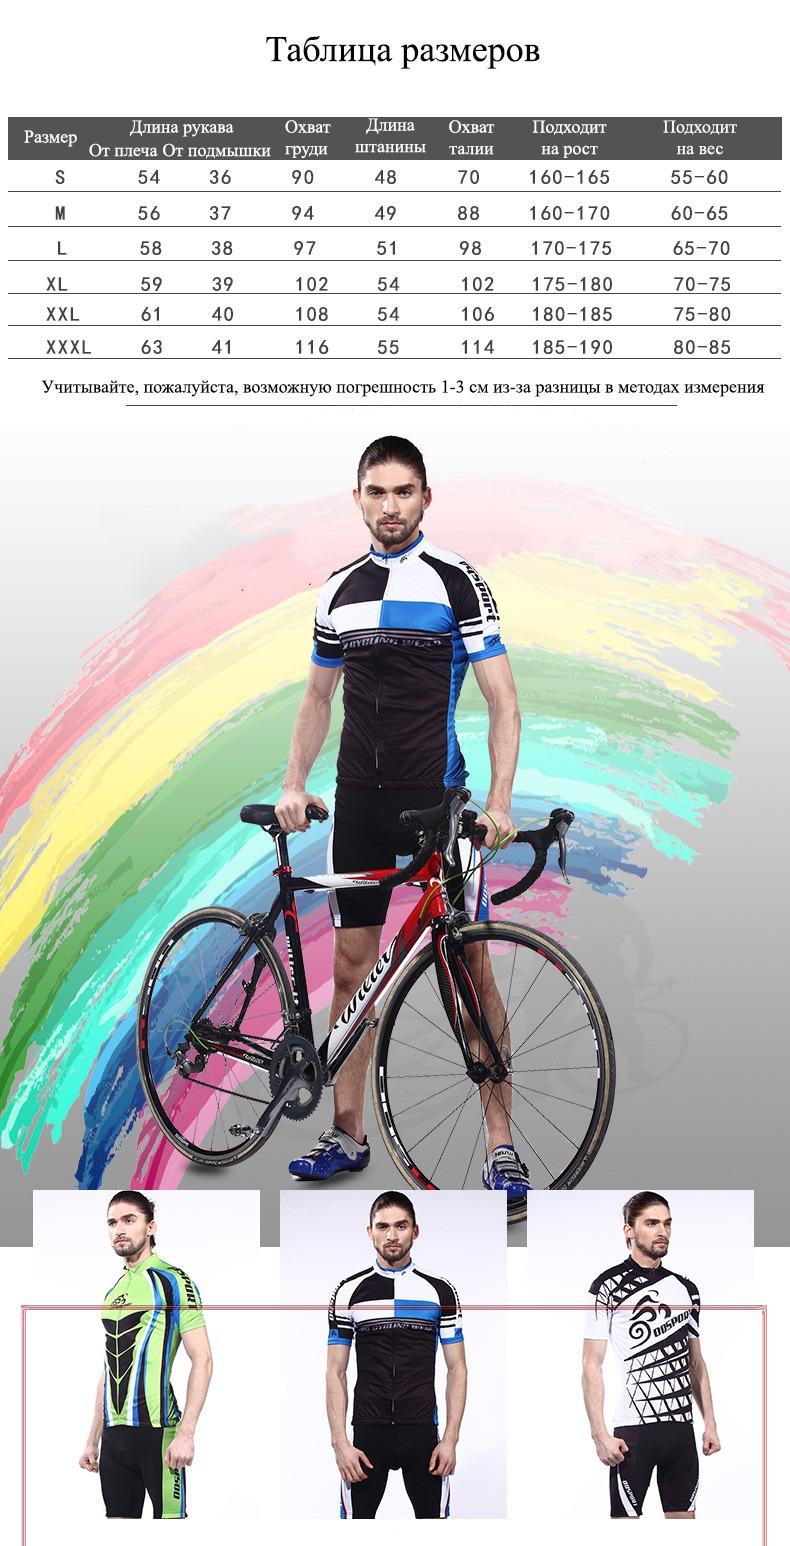 professionalnaja velosipednaja jekipirovka oqsport 16 - Профессиональная велосипедная экипировка OQsport